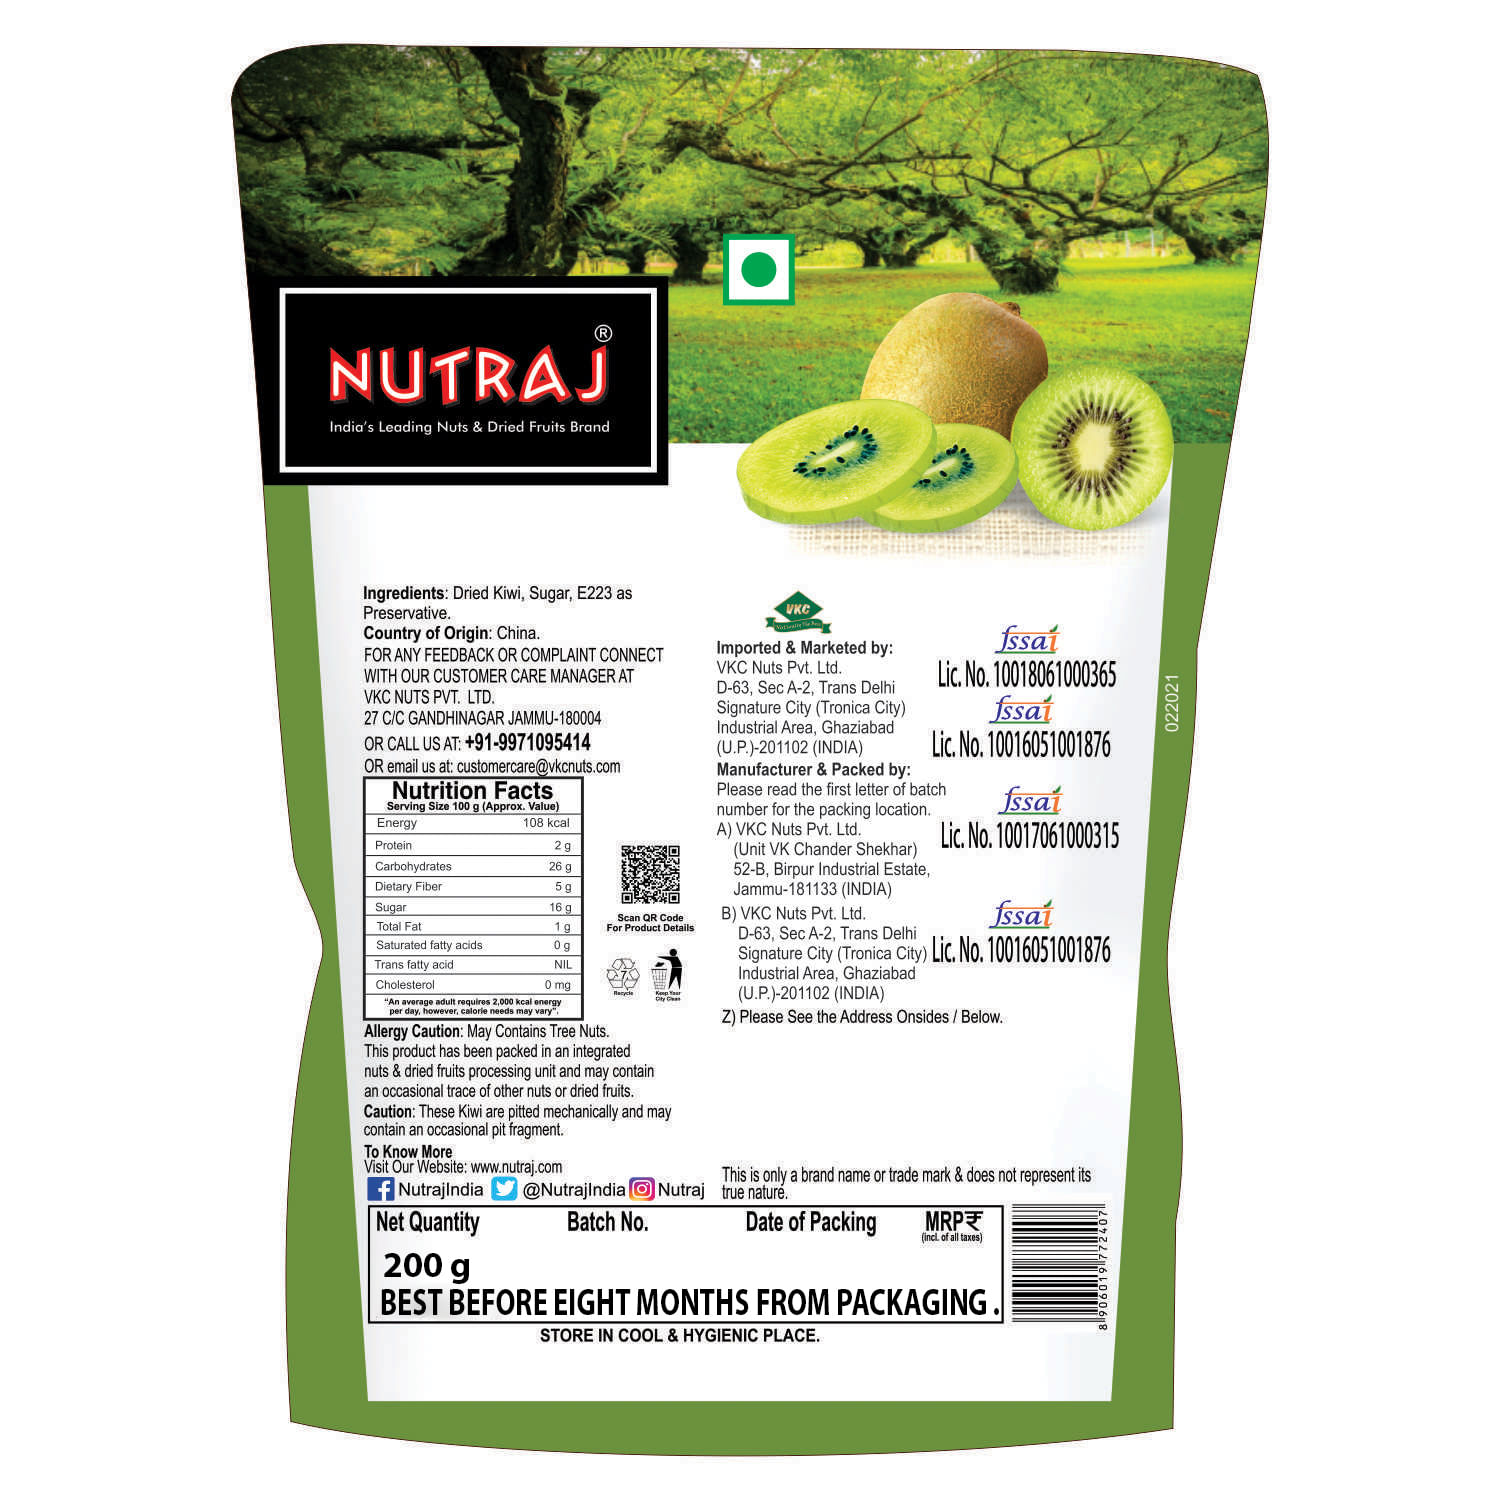 Nutraj Signature Dried Kiwi 600g (3 X 200g) - Vacuum Pack